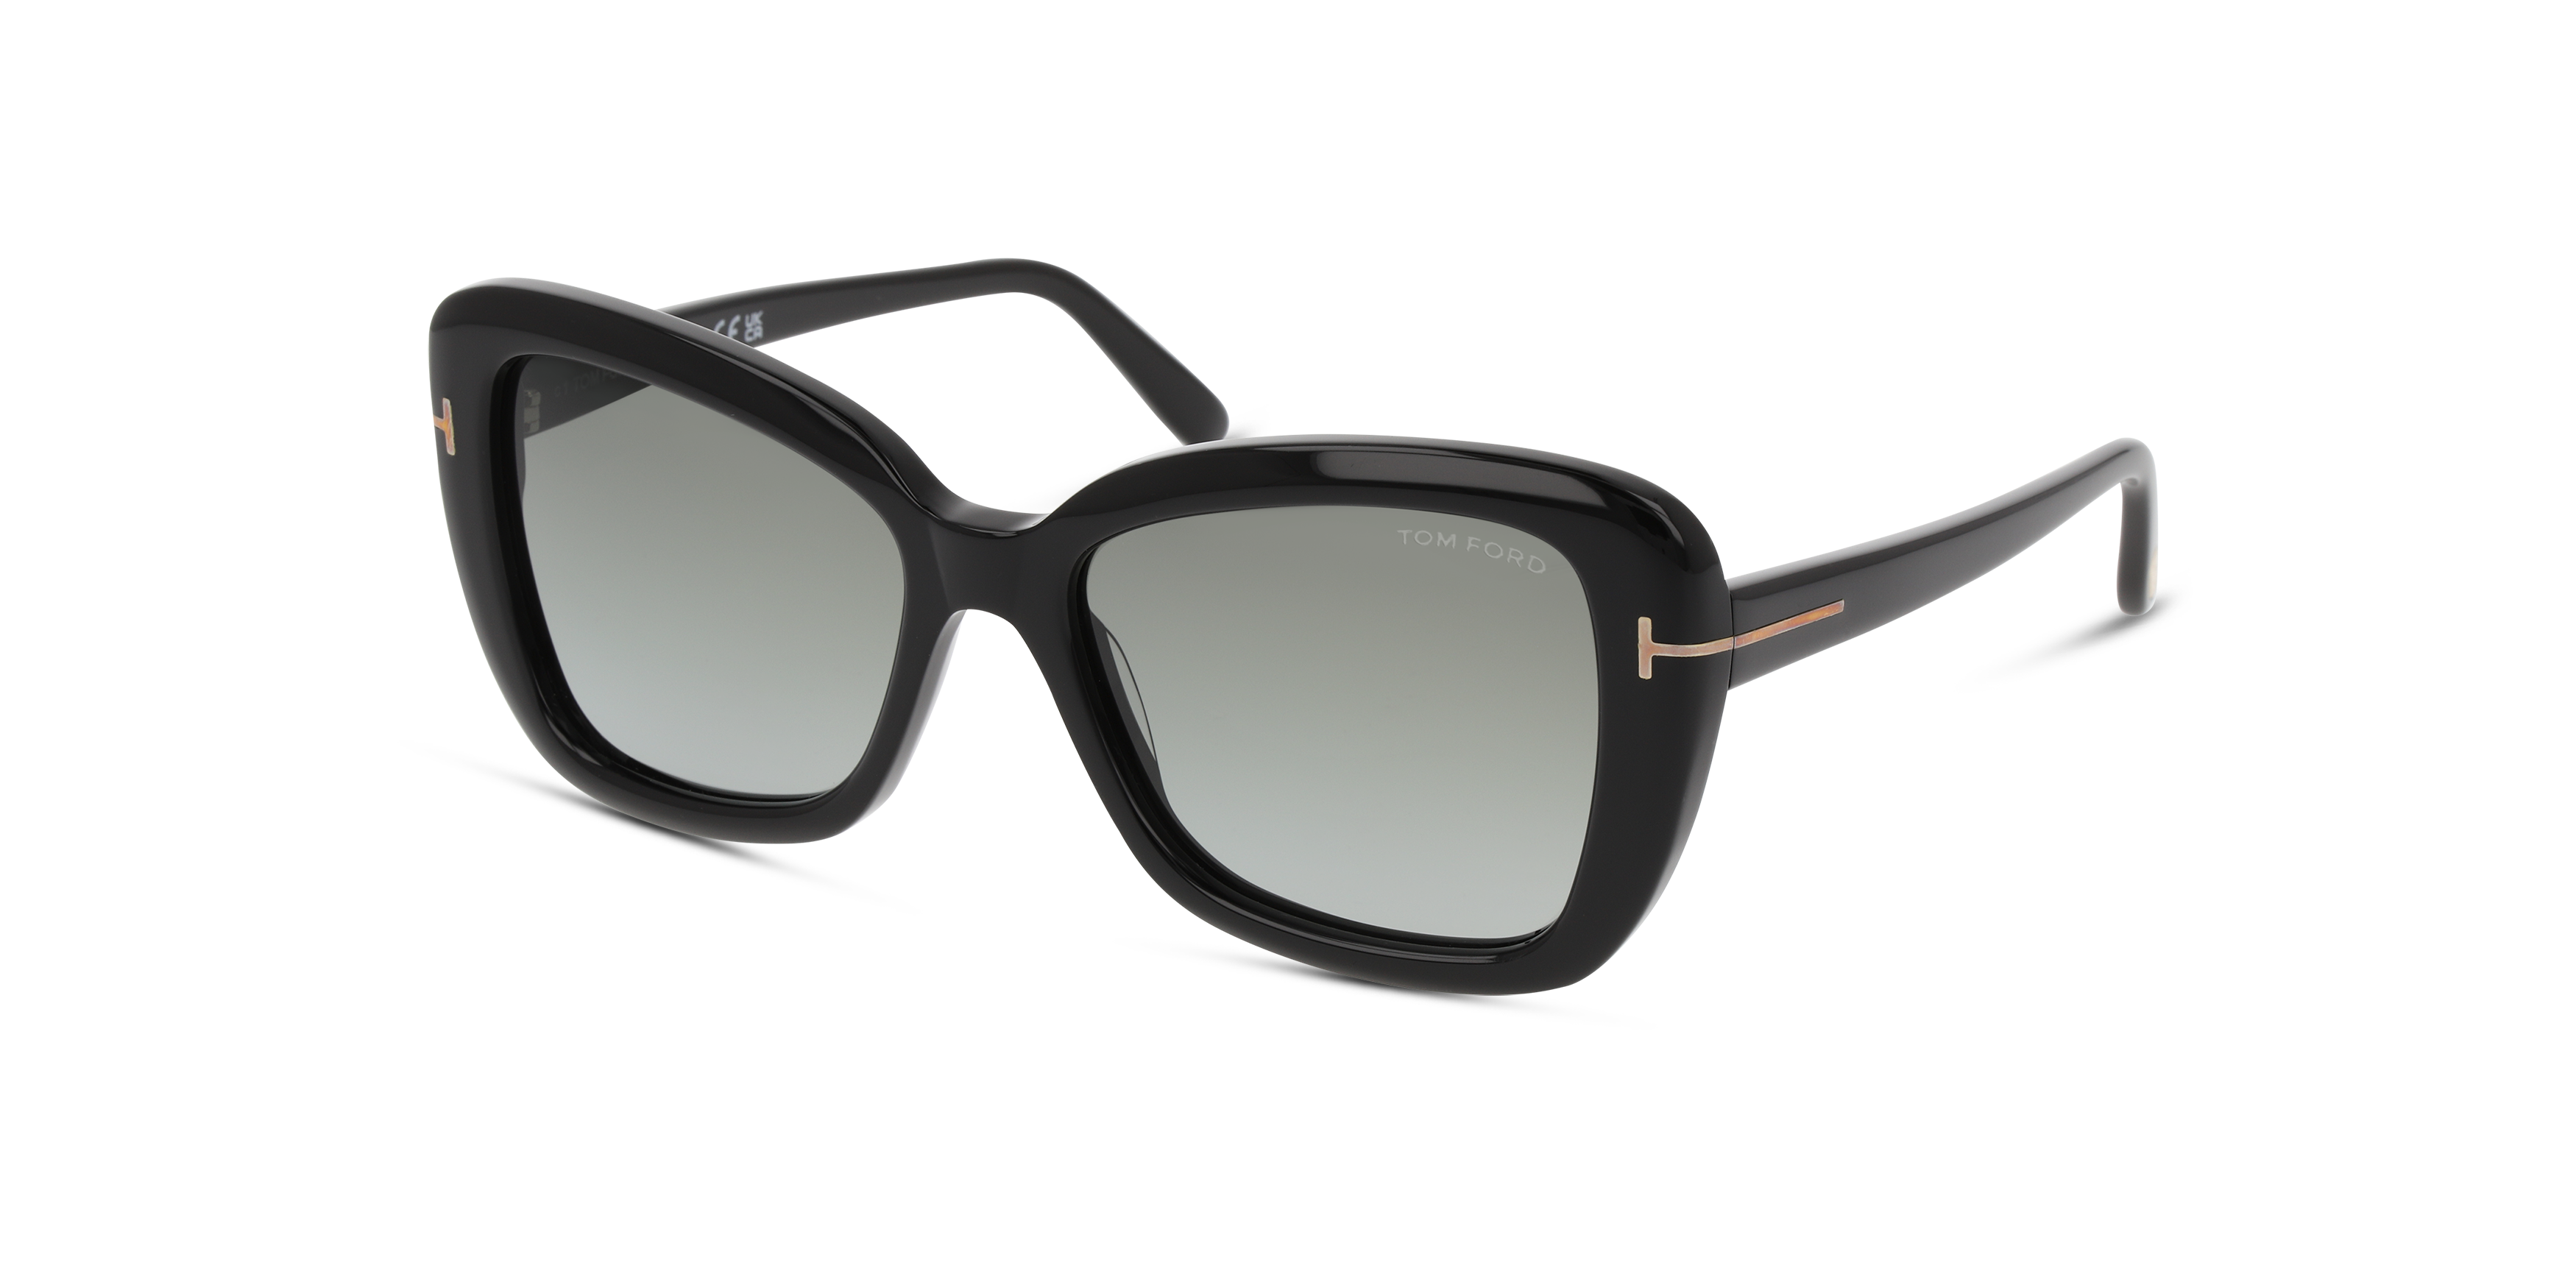 Angle_Left01 Tom Ford FT 1008 Sunglasses Grey / Black